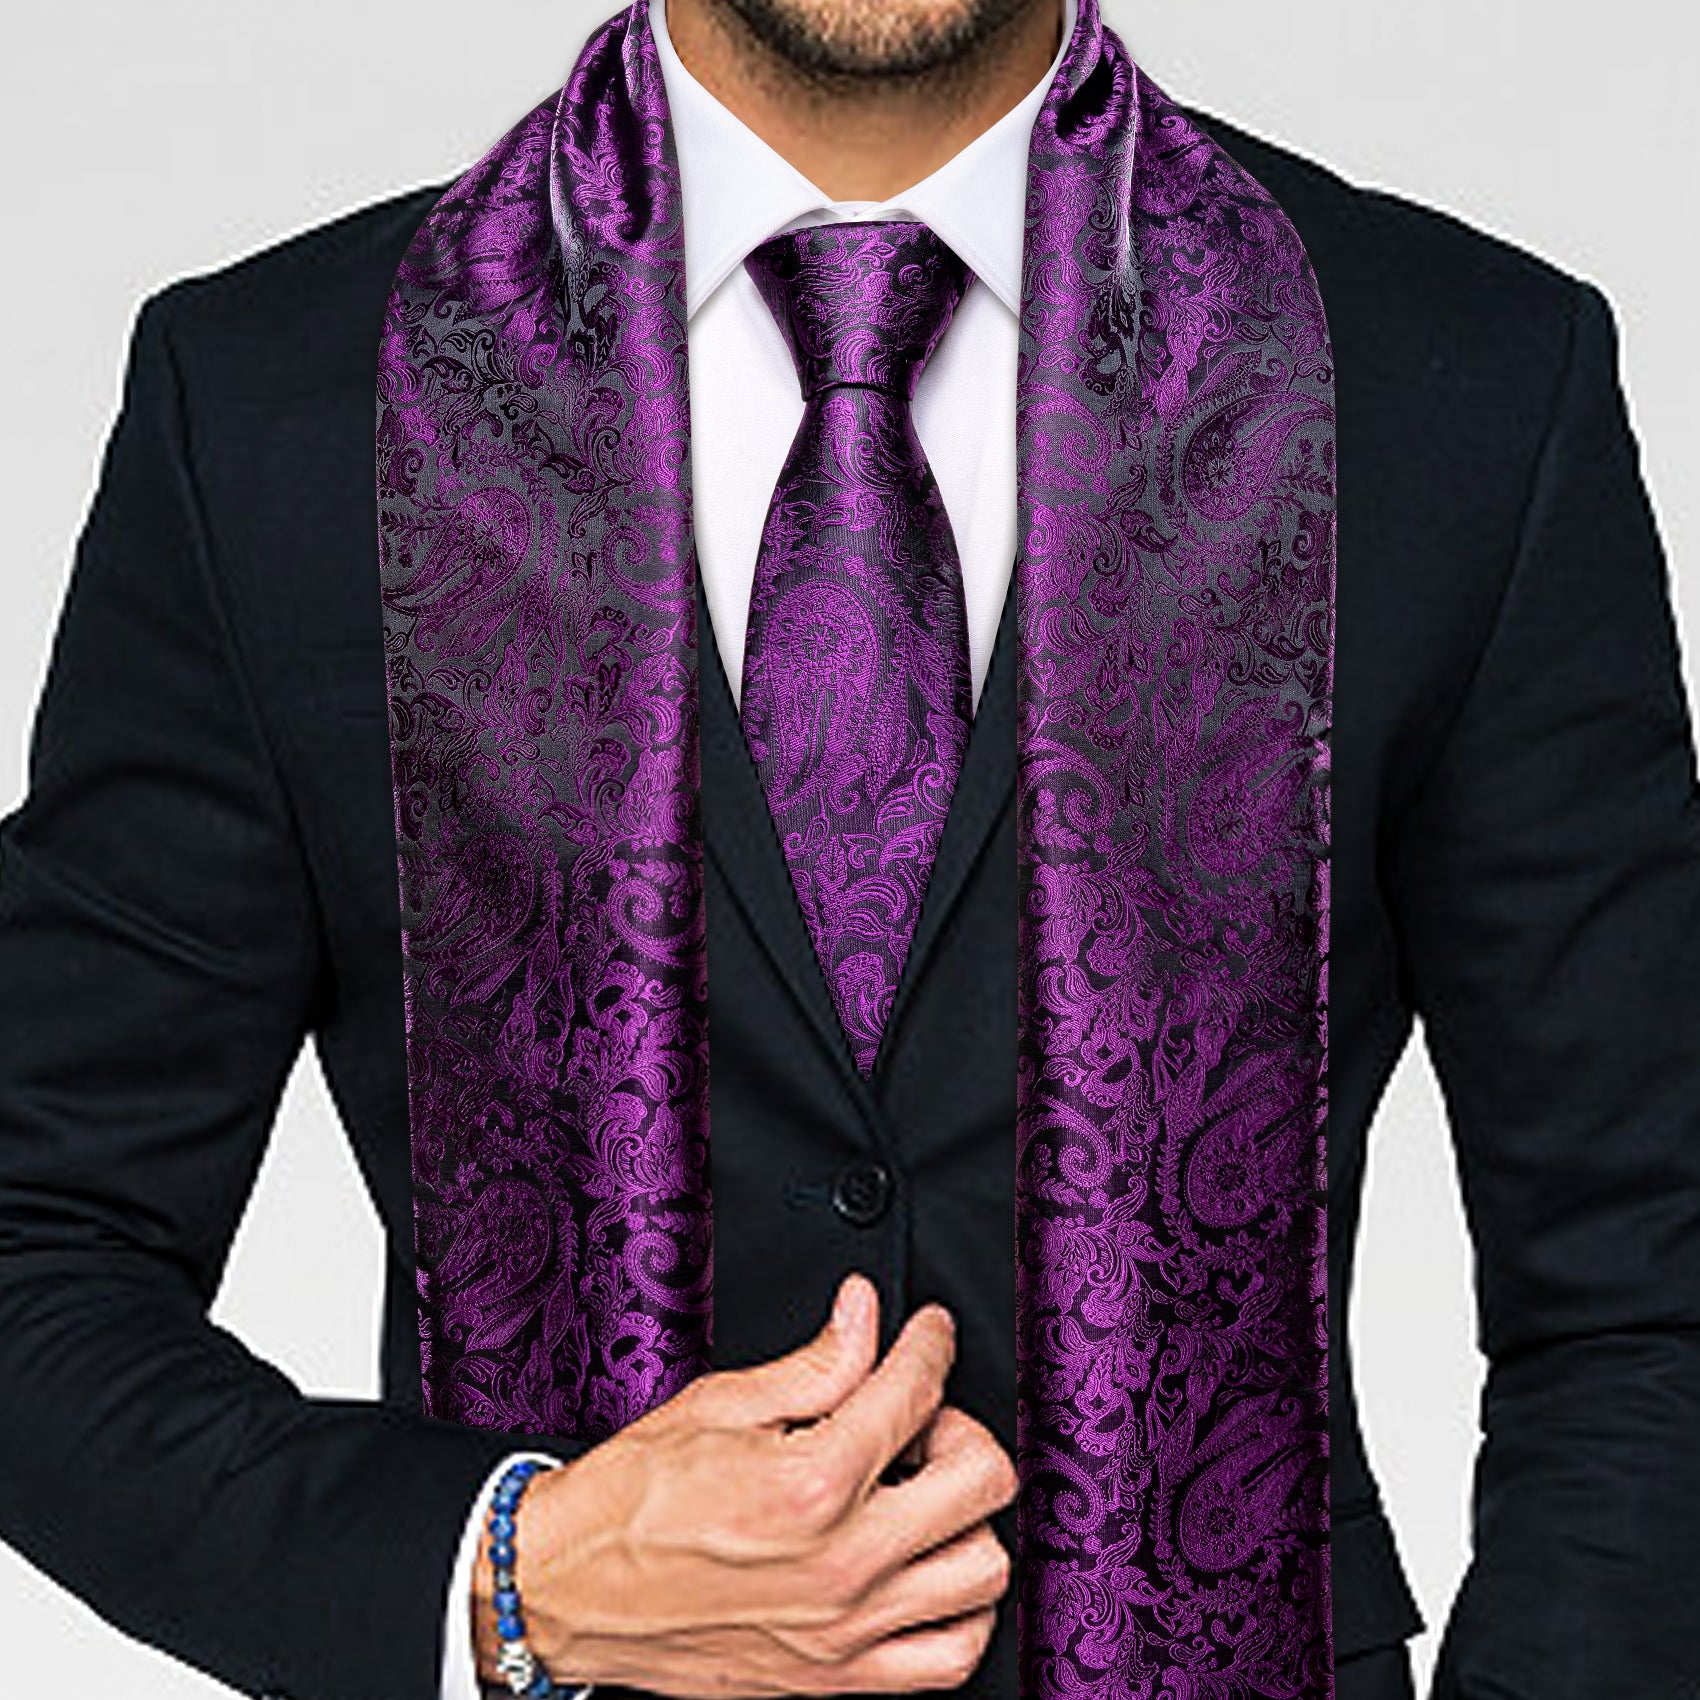 Barry.wang Black Tie Scarf Purple Jacquard Floral Men's Scarf Tie Set New Luxury